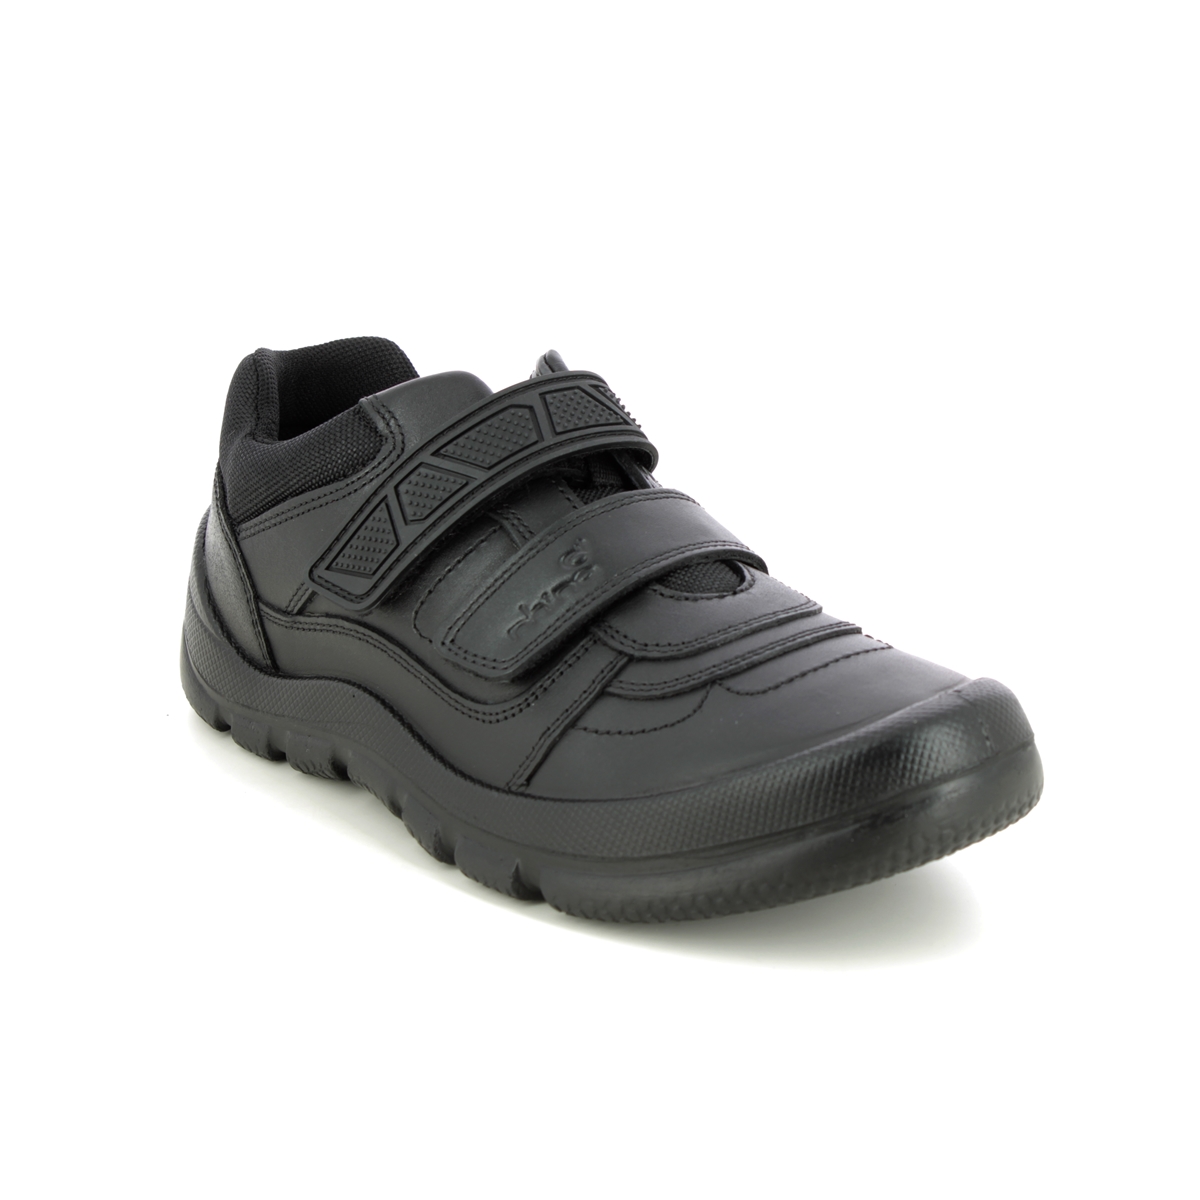 Start Rite - Rhino Warrior In Black Leather 8237-76F In Size 4.5 In Plain Black Leather For School Boys Shoes  In Black Leather For kids